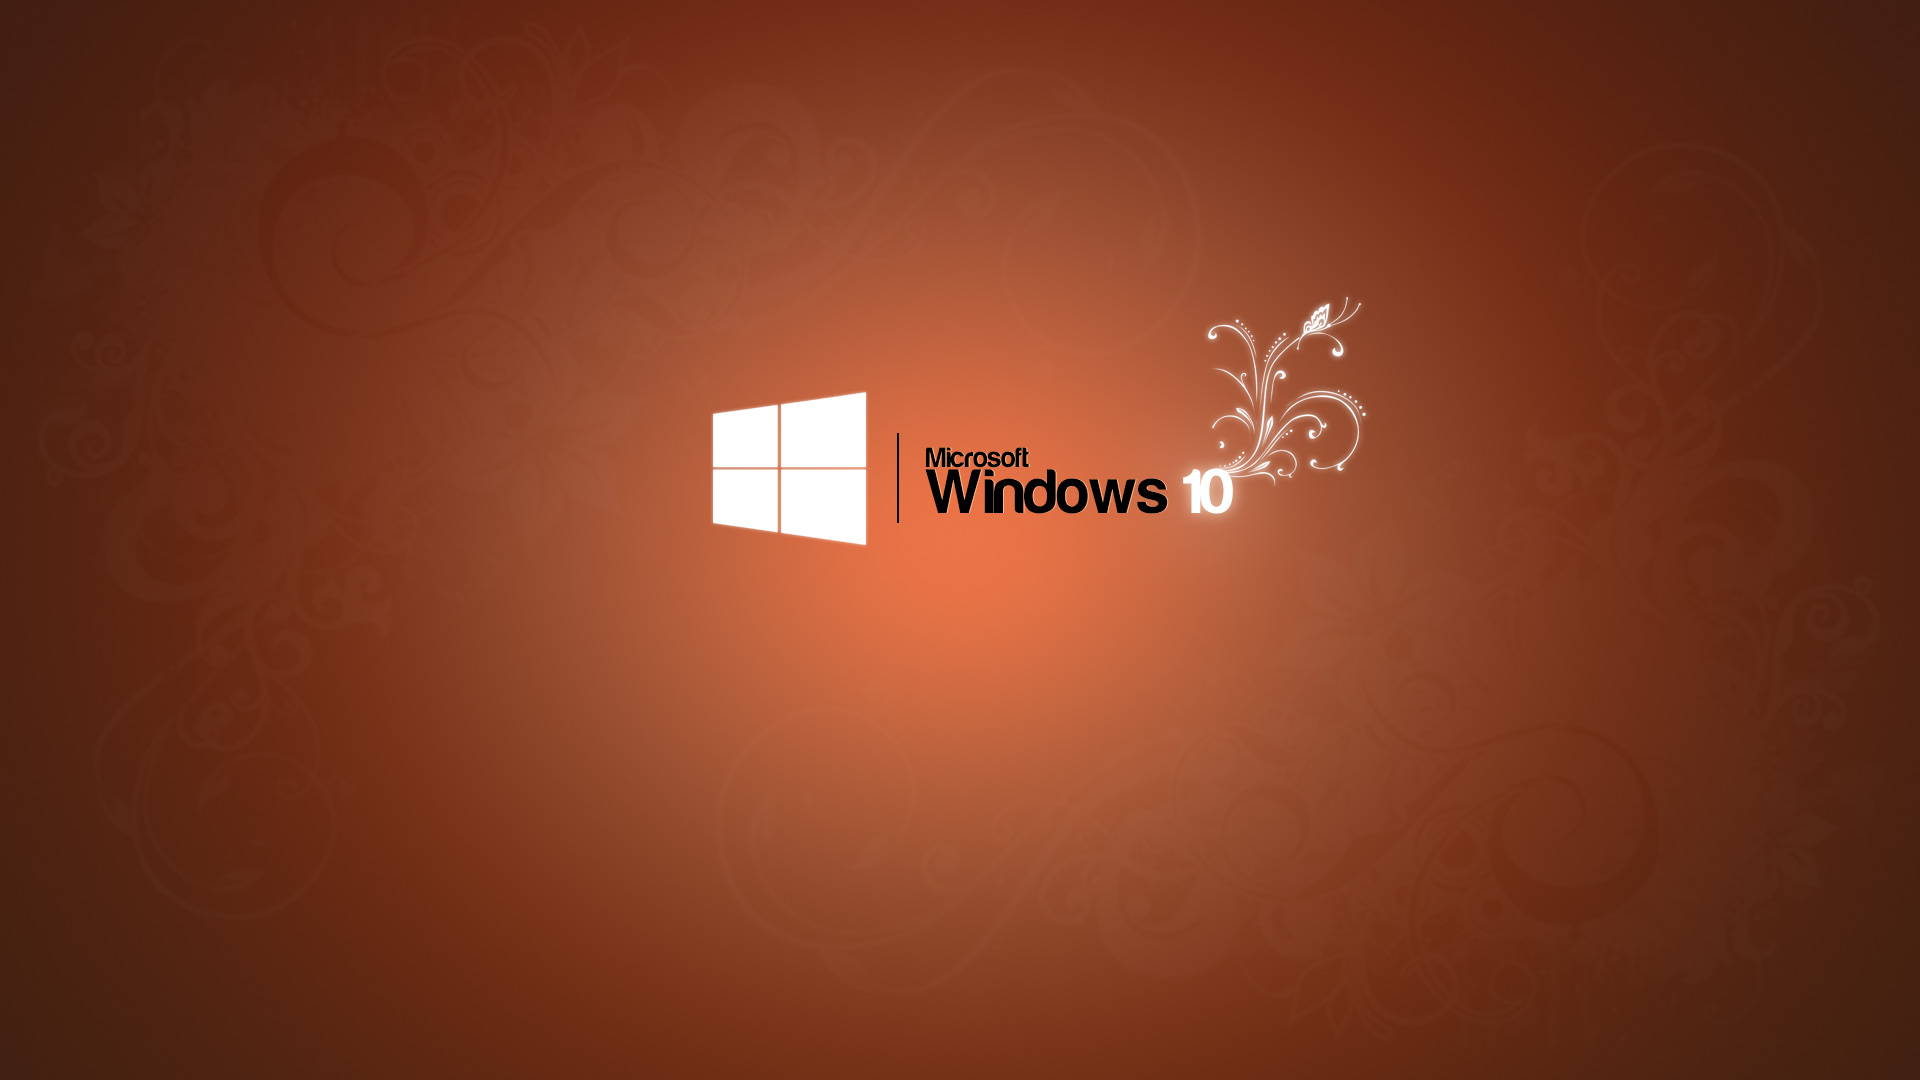 Free Wallpapers   Windows 10 1920x1080 wallpaper